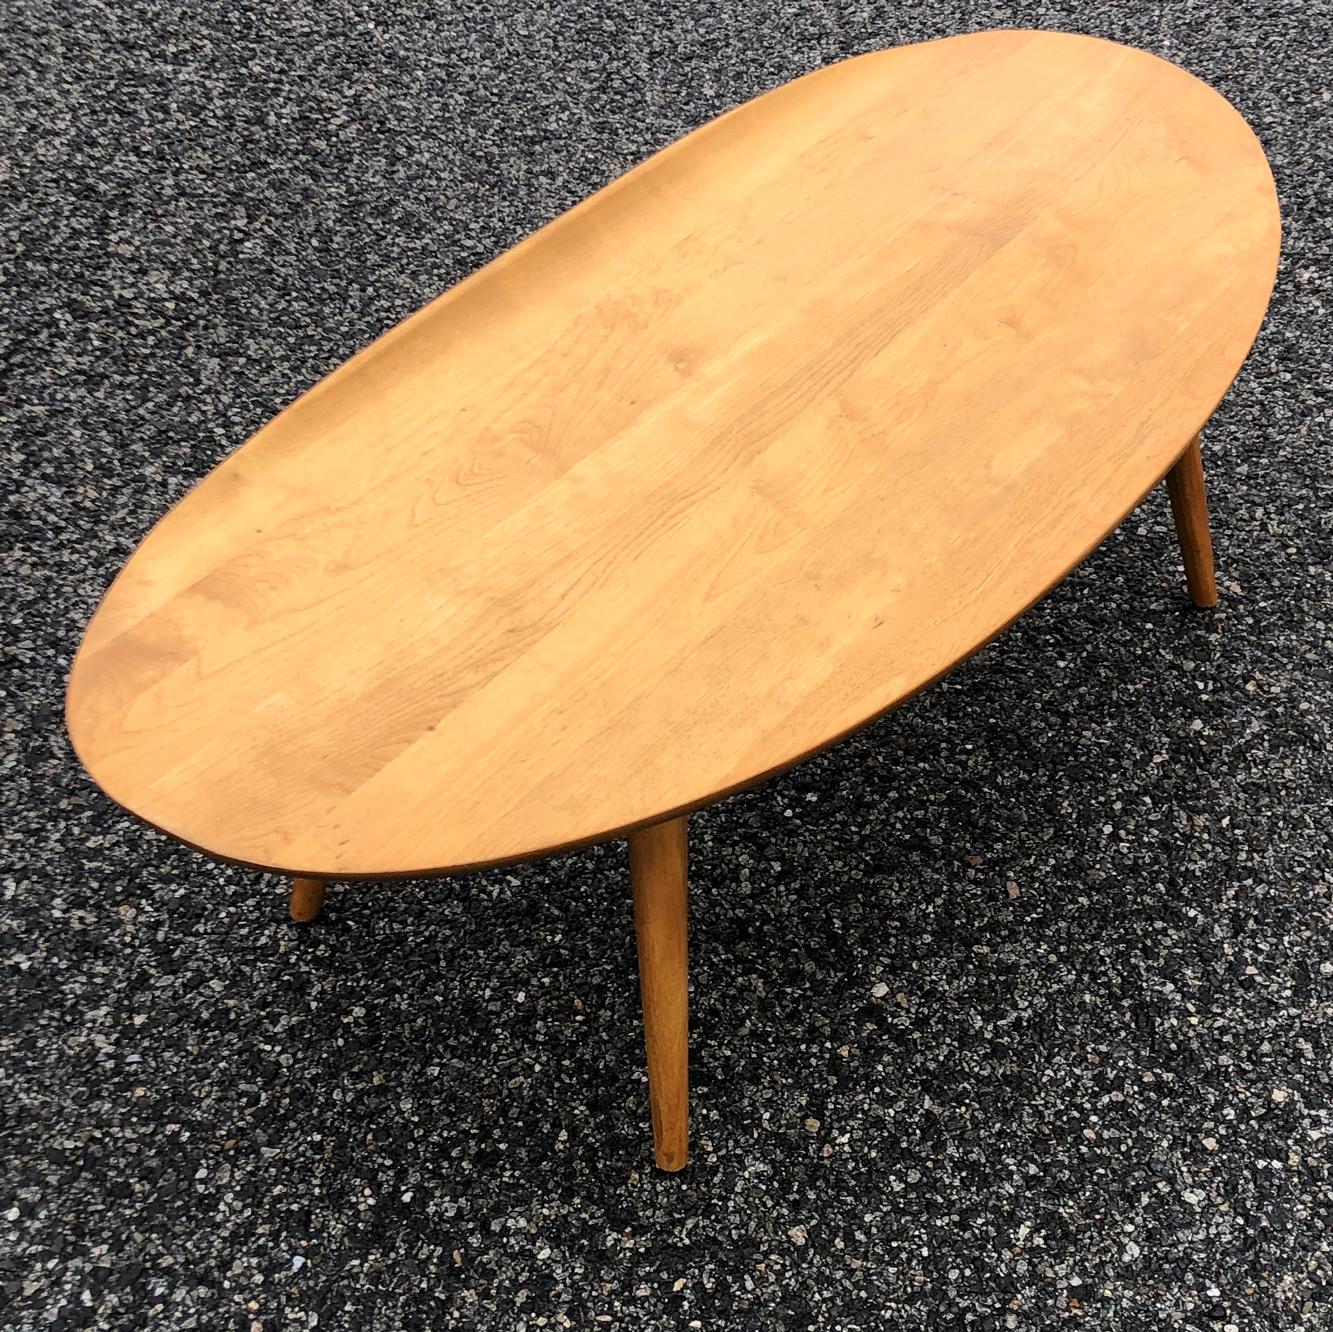 Surf Table, Midcentury Russel Wright Elliptical Coffee Table with Raised Edge 1